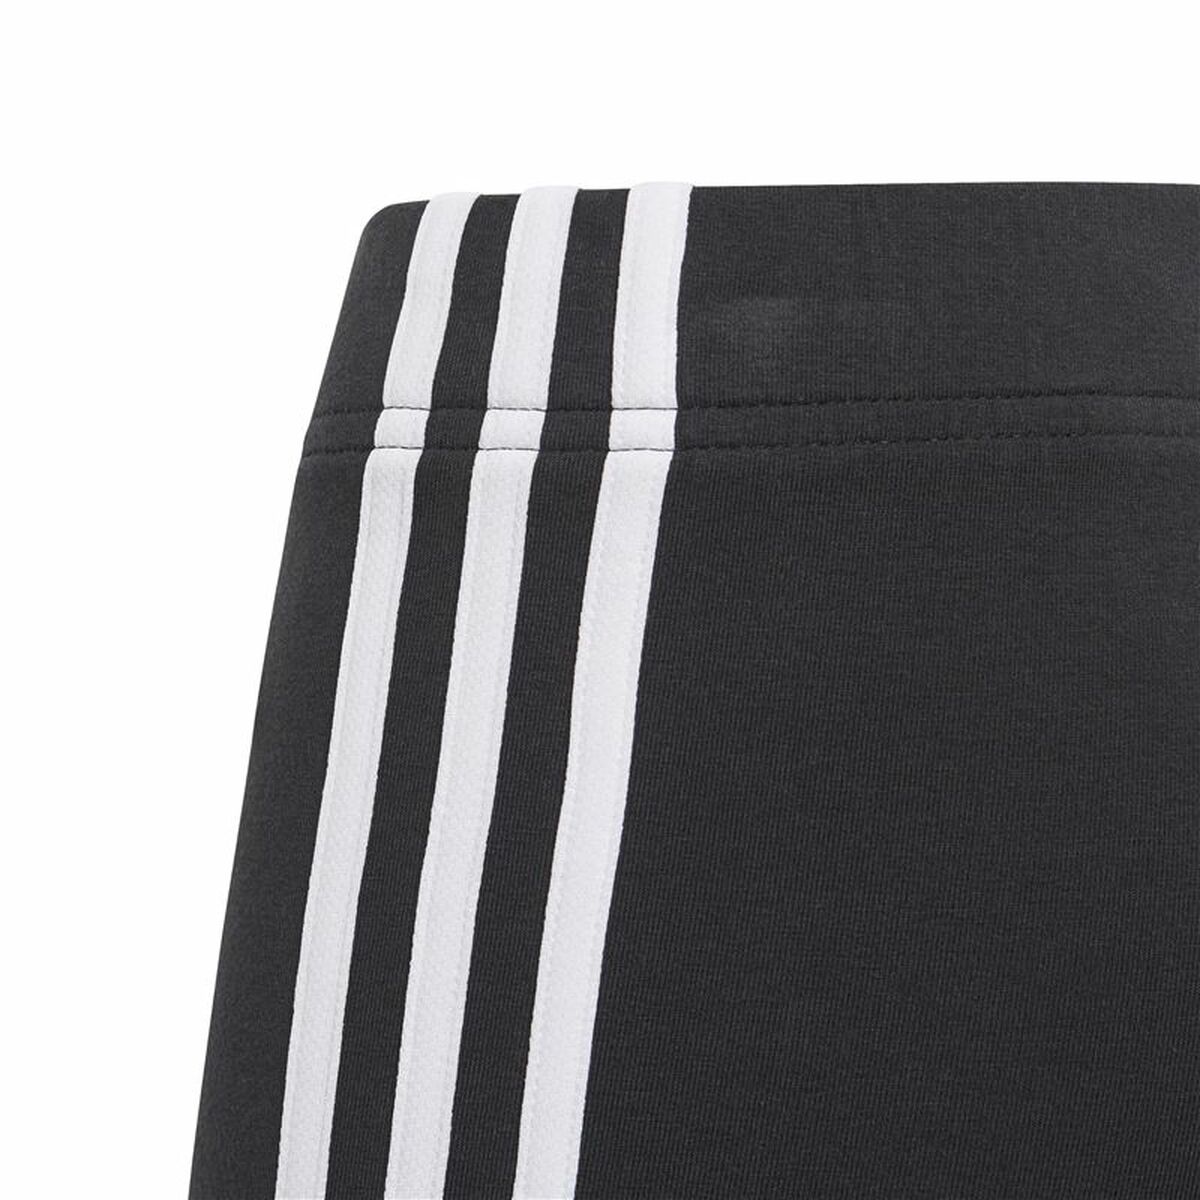 Sports Leggings Adidas Essentials 3 Stripes Black